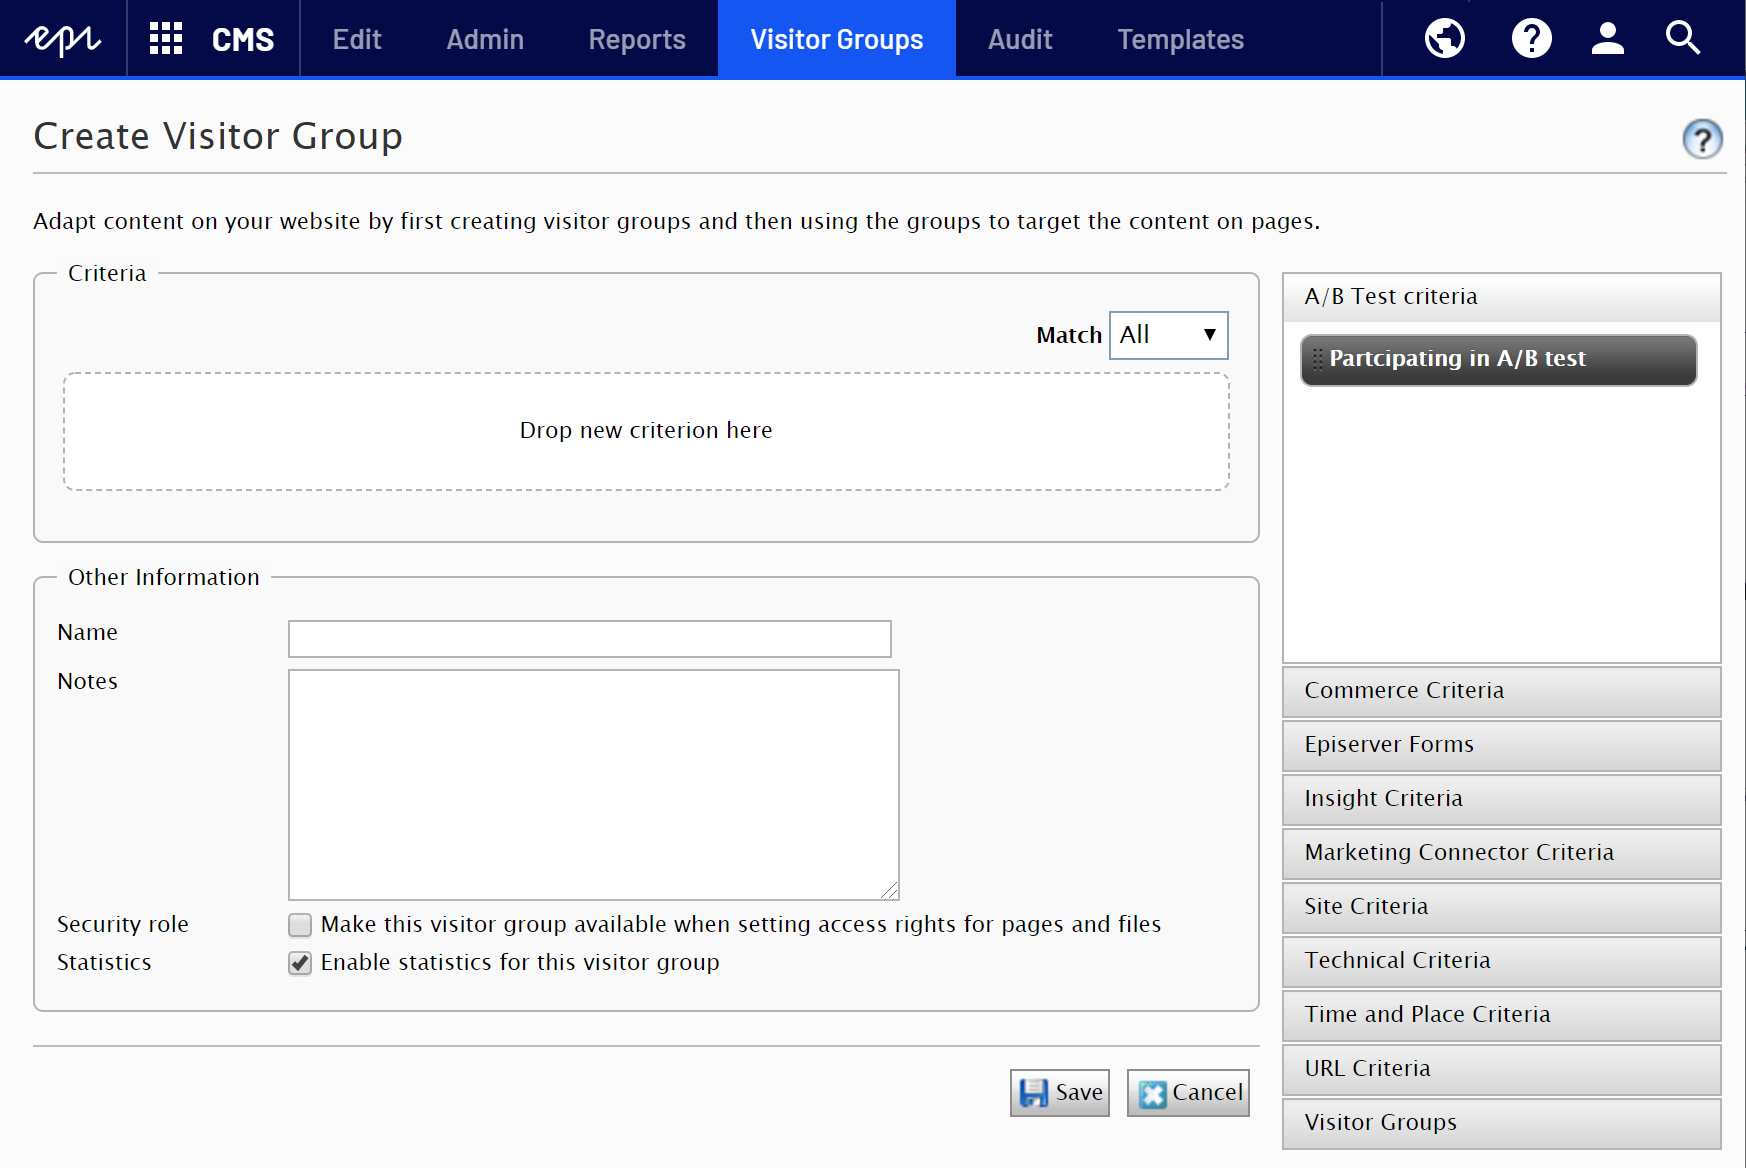 Image: Create Visitor Group dialog box